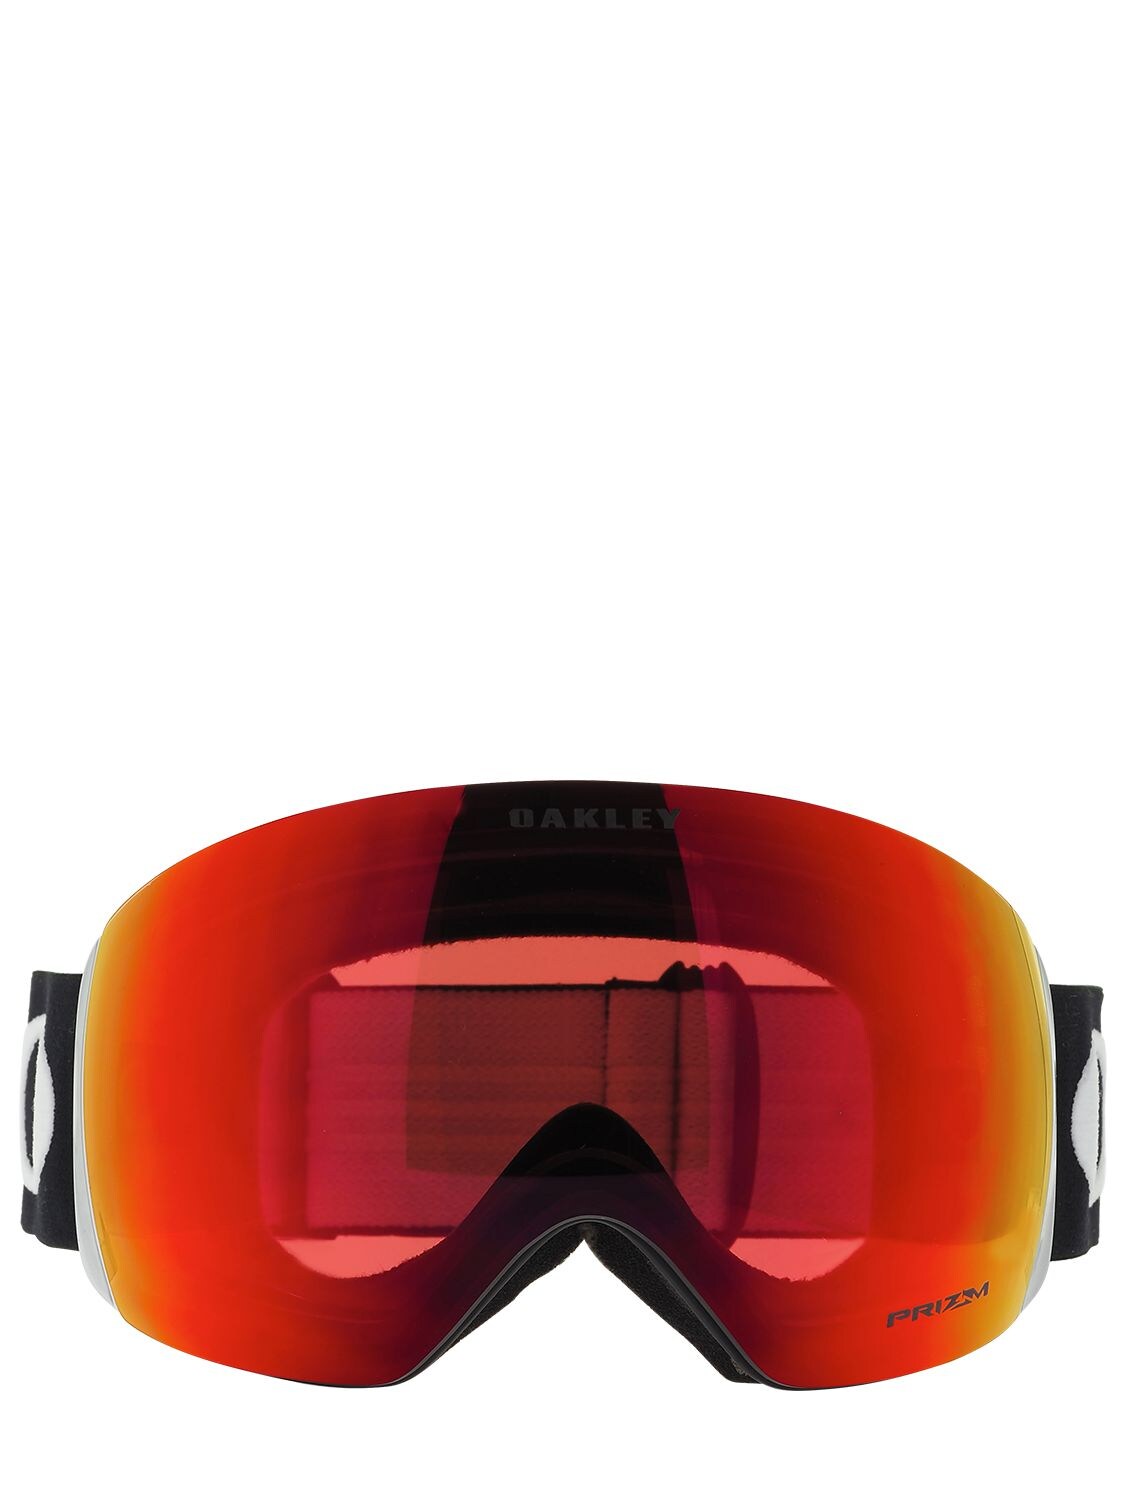 Oakley Flight Deck Torstein Horgmo Snow Goggles In Iridium